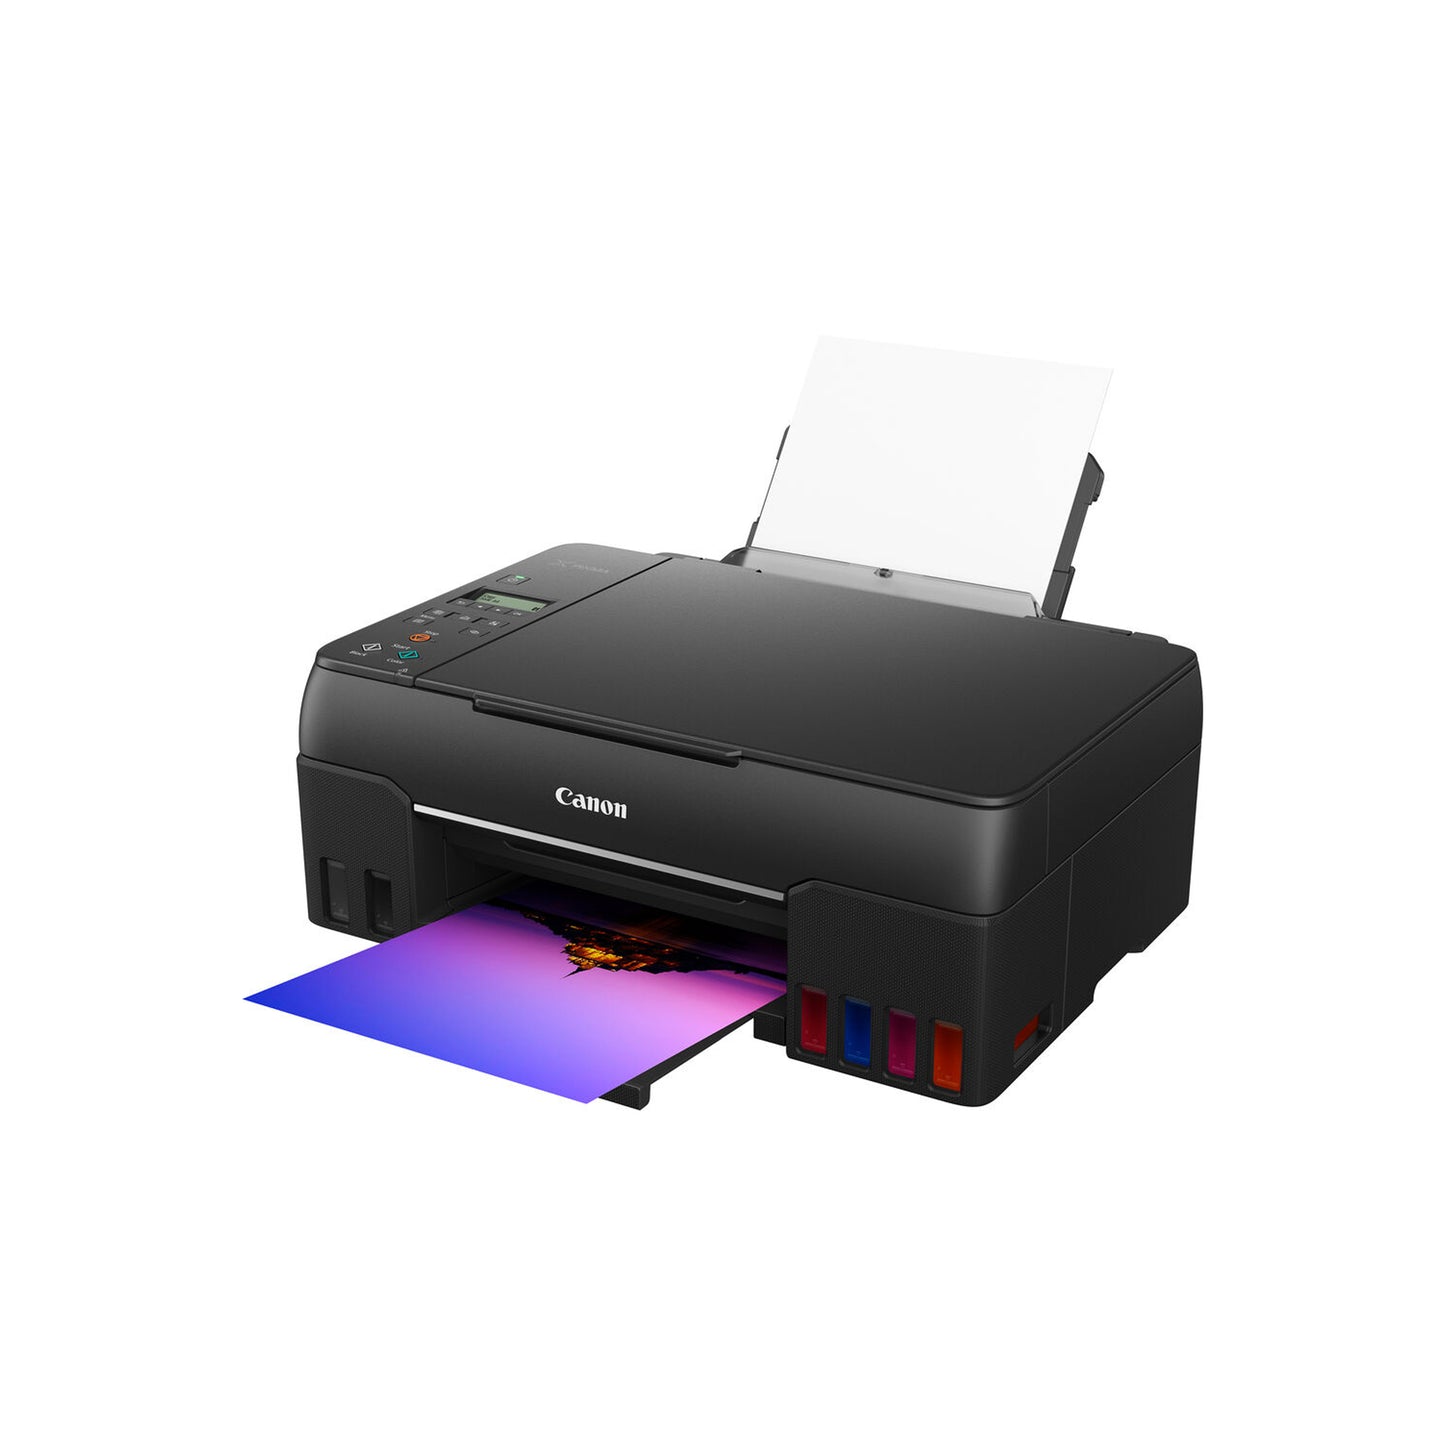 Canon PIXMA G620 Wireless MegaTank Photo All-in-One Printer [Print, Copy, Scan], Black,Works with Alexa